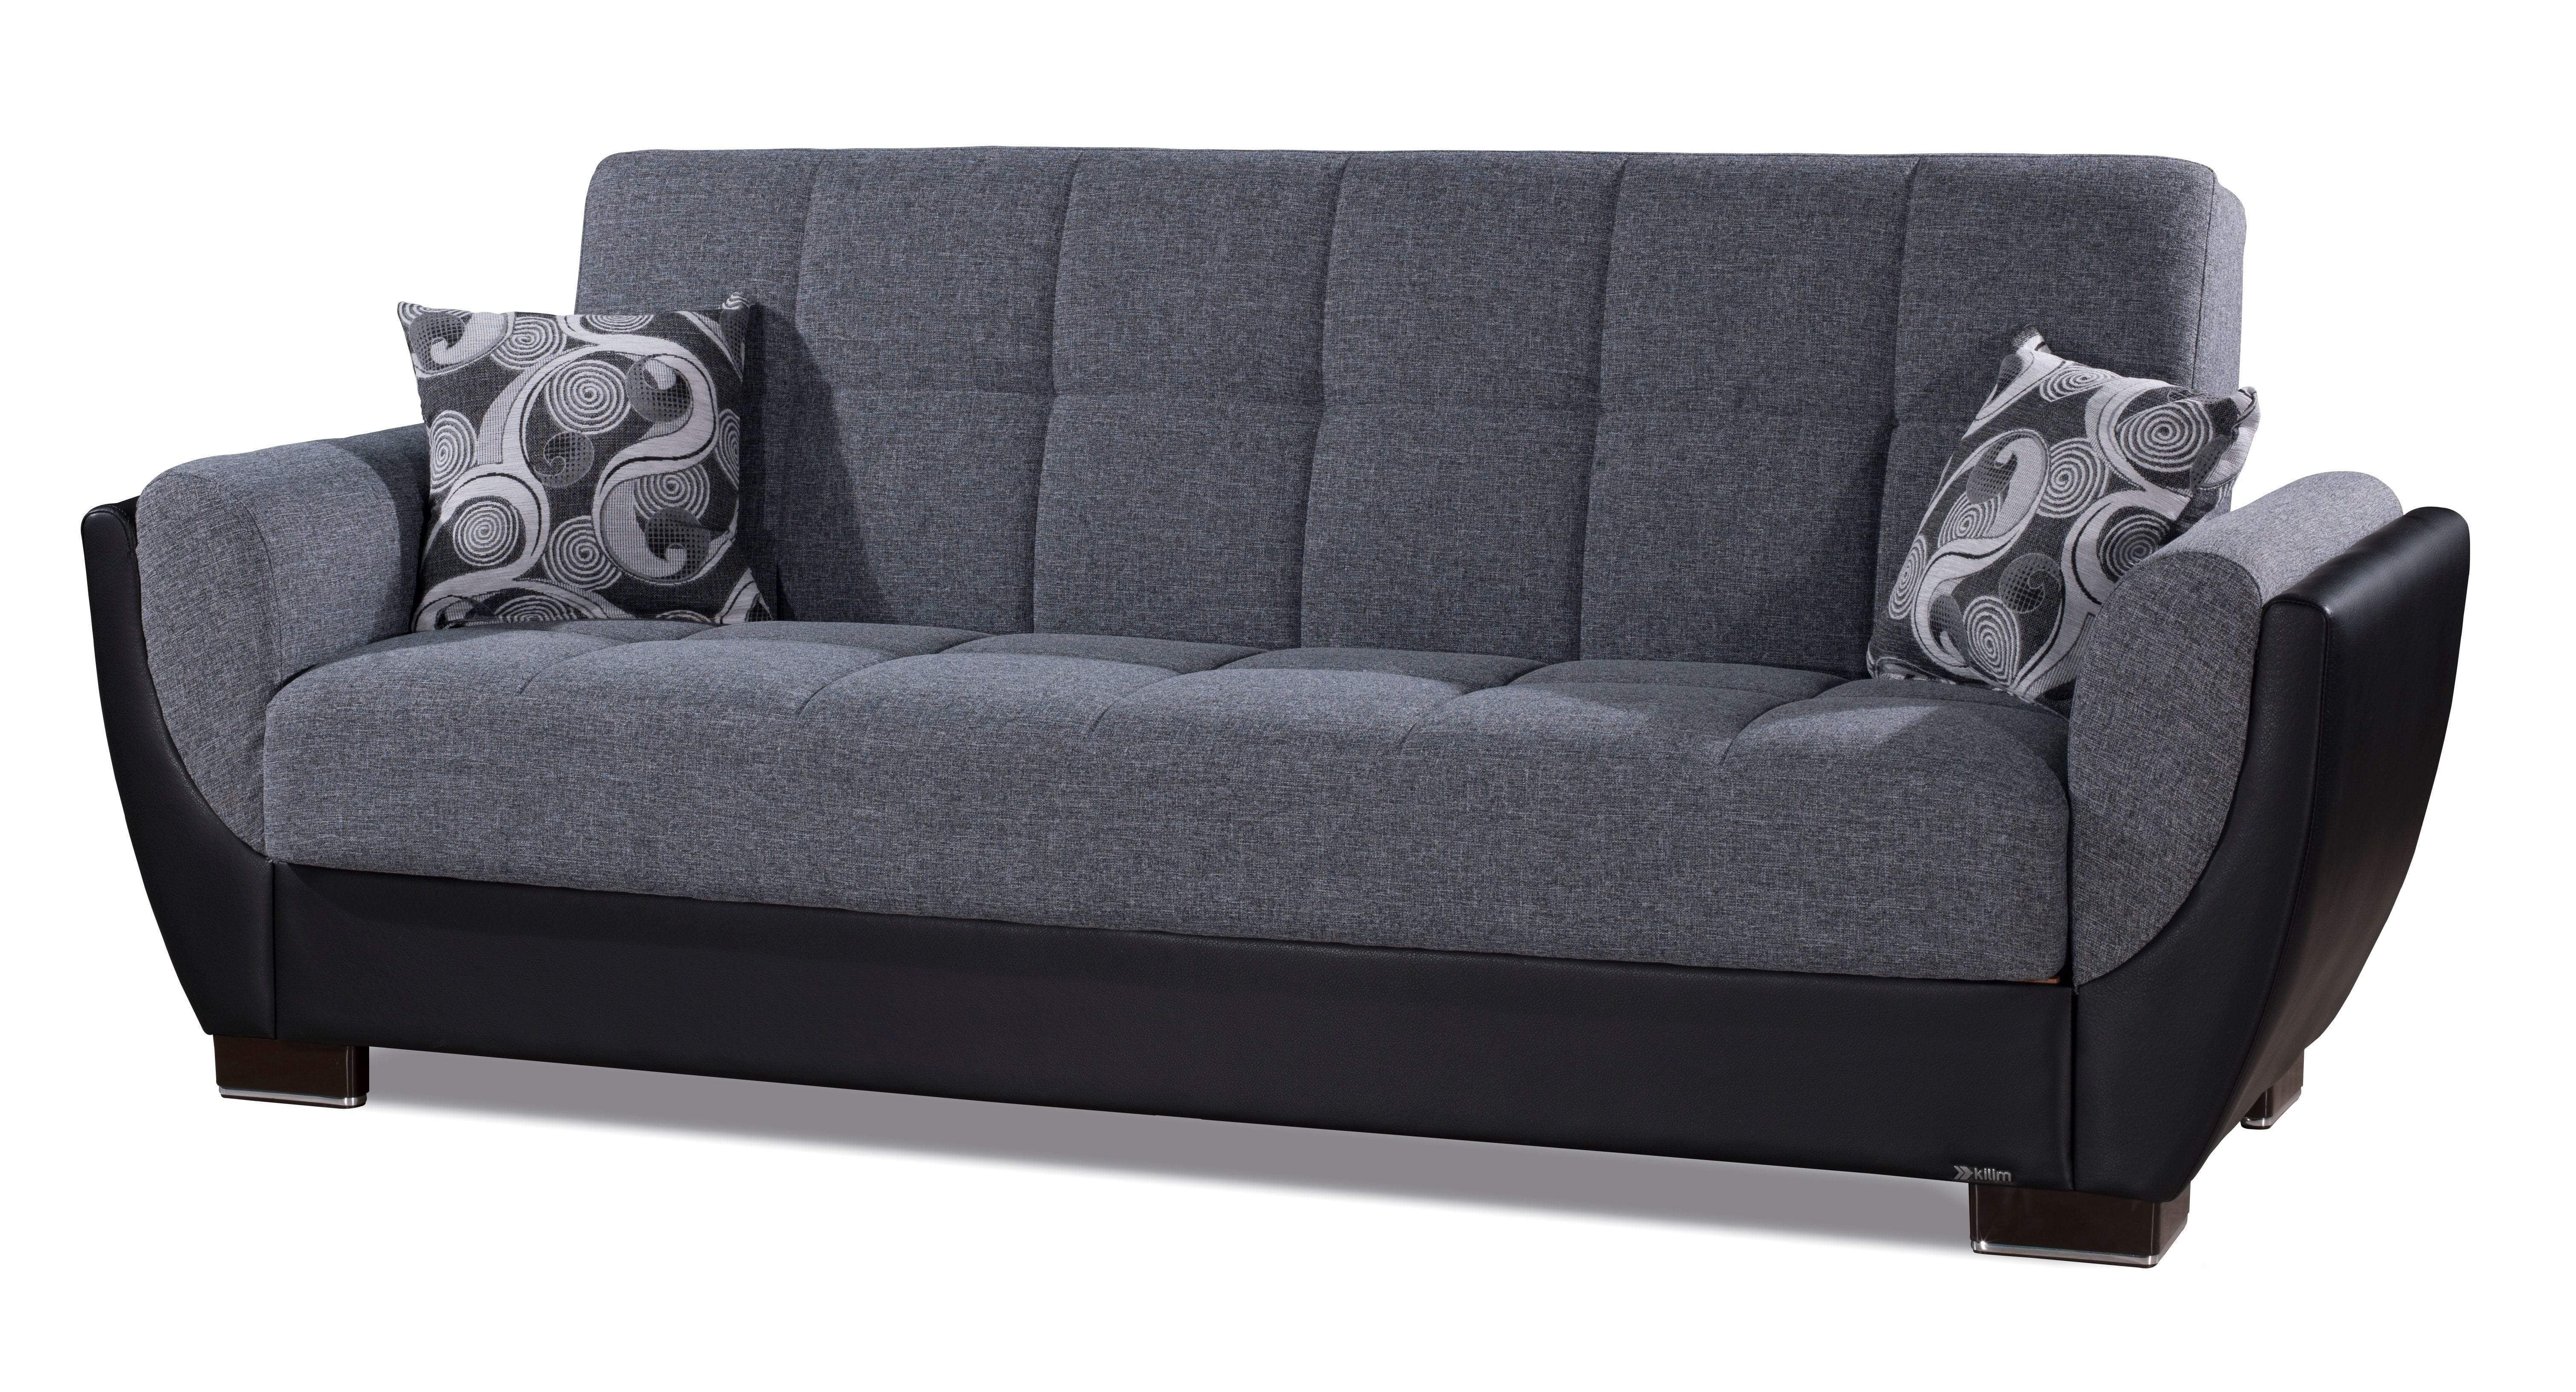 mostt comfortabke firm sofa bed